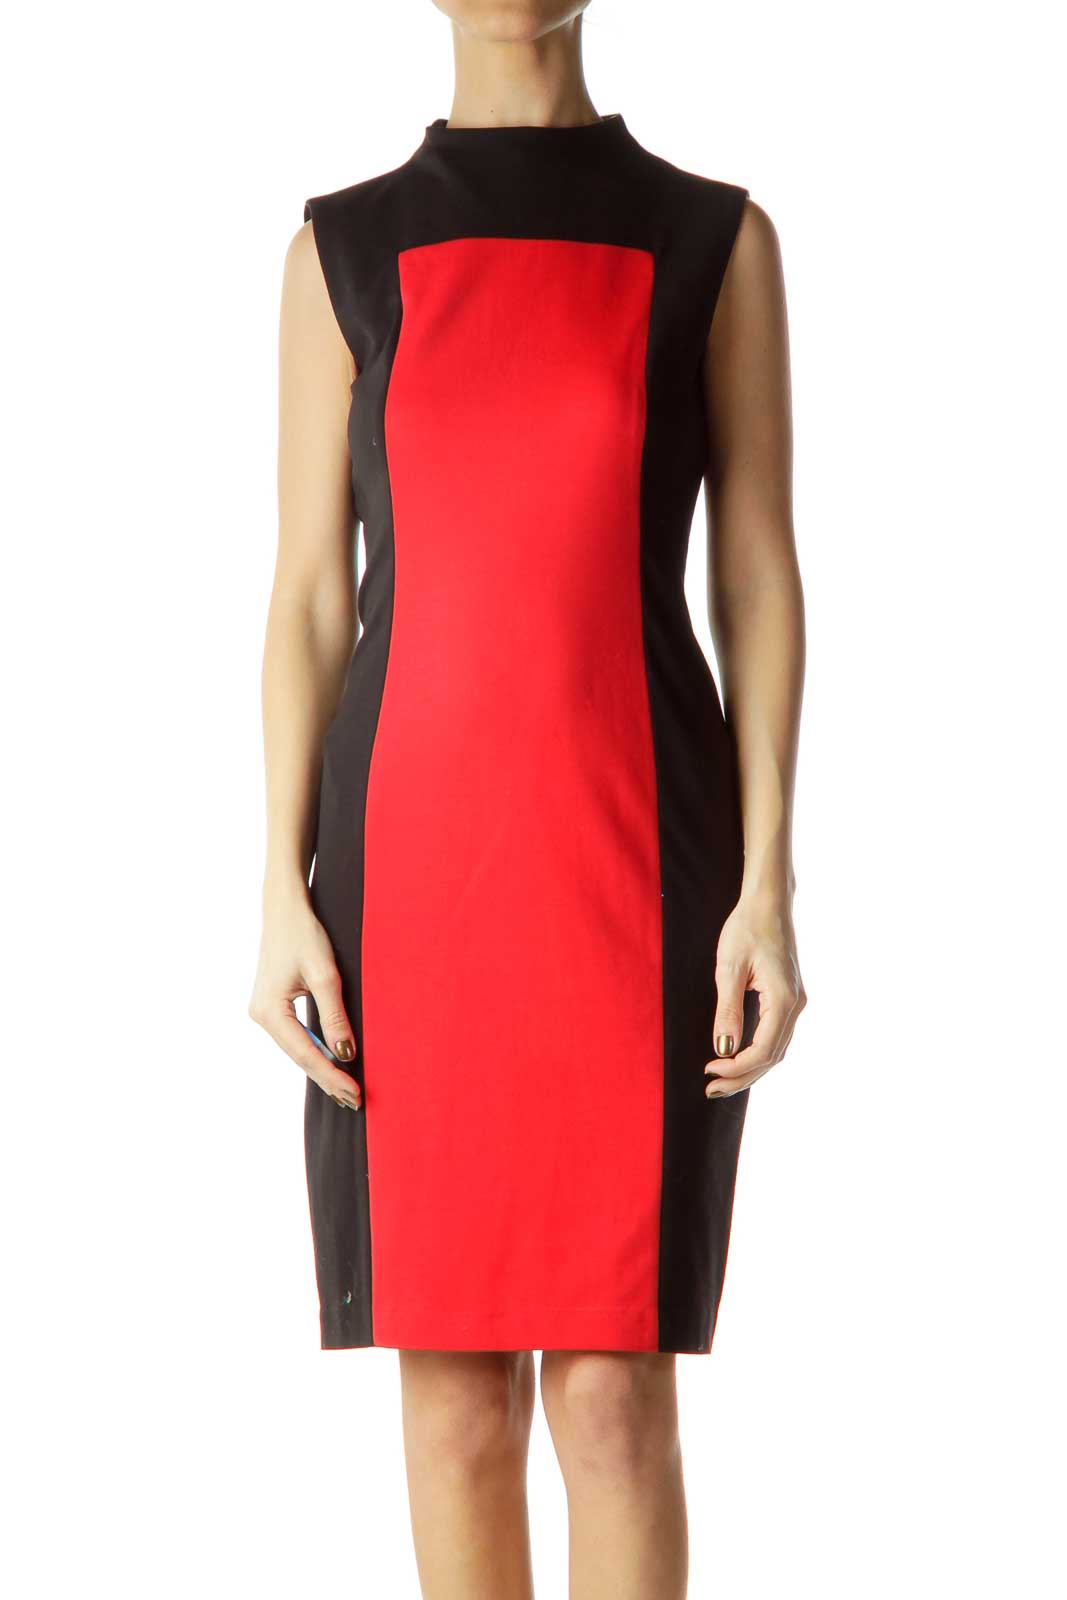 Calvin Klein - Red Black Sleeveless Colorblock Dress Polyester Rayon  Spandex | SilkRoll